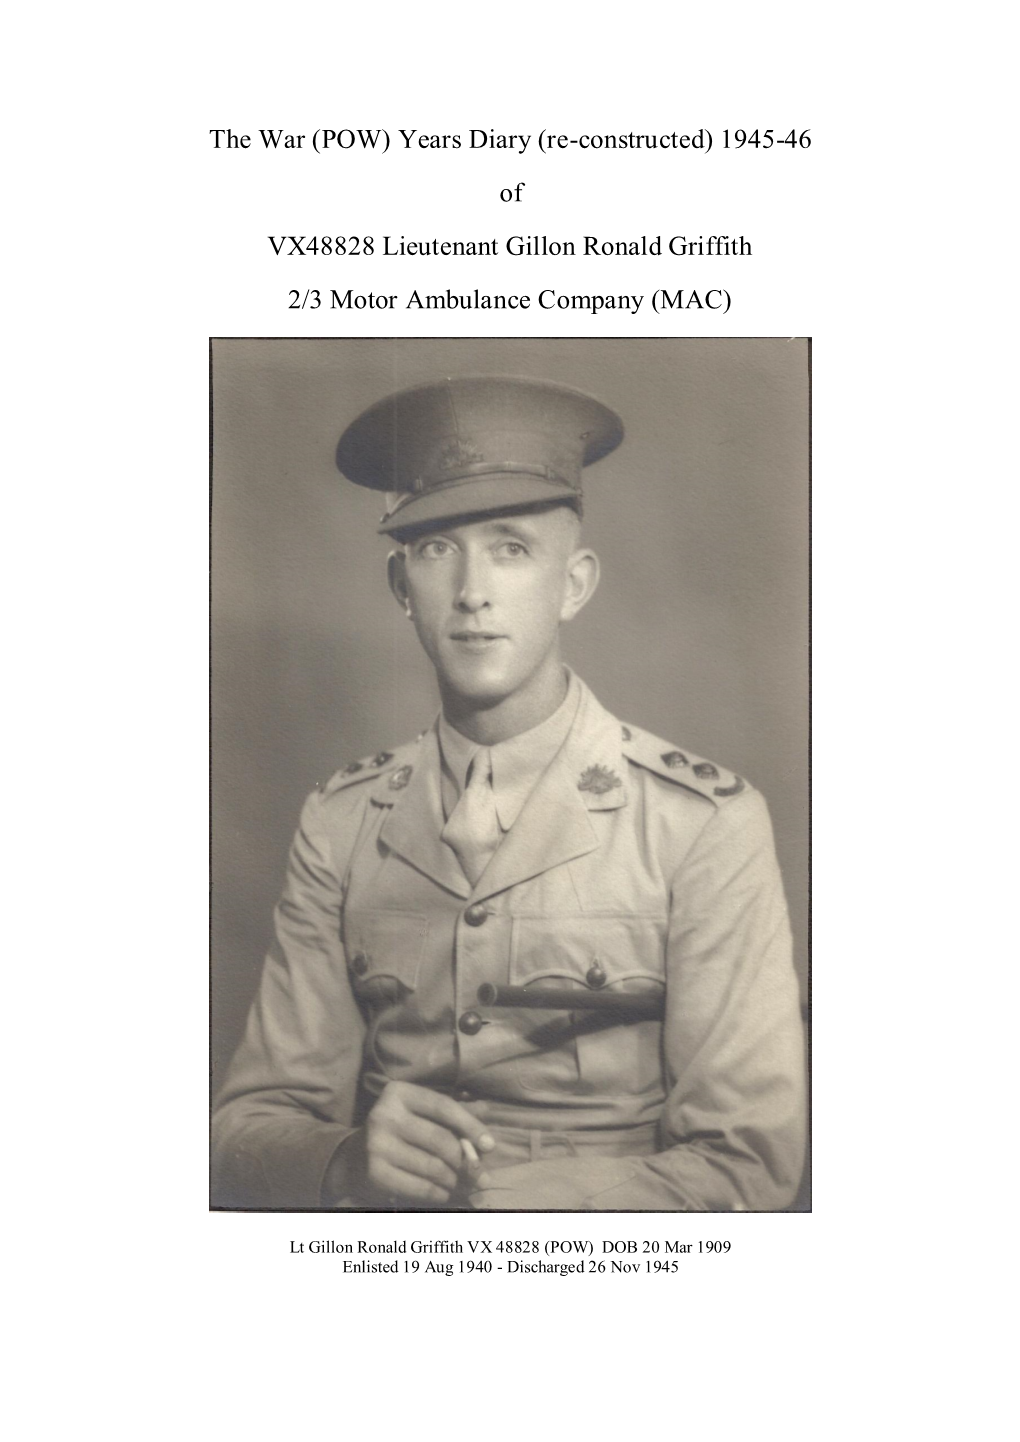 POW) Years Diary (Re-Constructed) 1945-46 of VX48828 Lieutenant Gillon Ronald Griffith 2/3 Motor Ambulance Company (MAC)